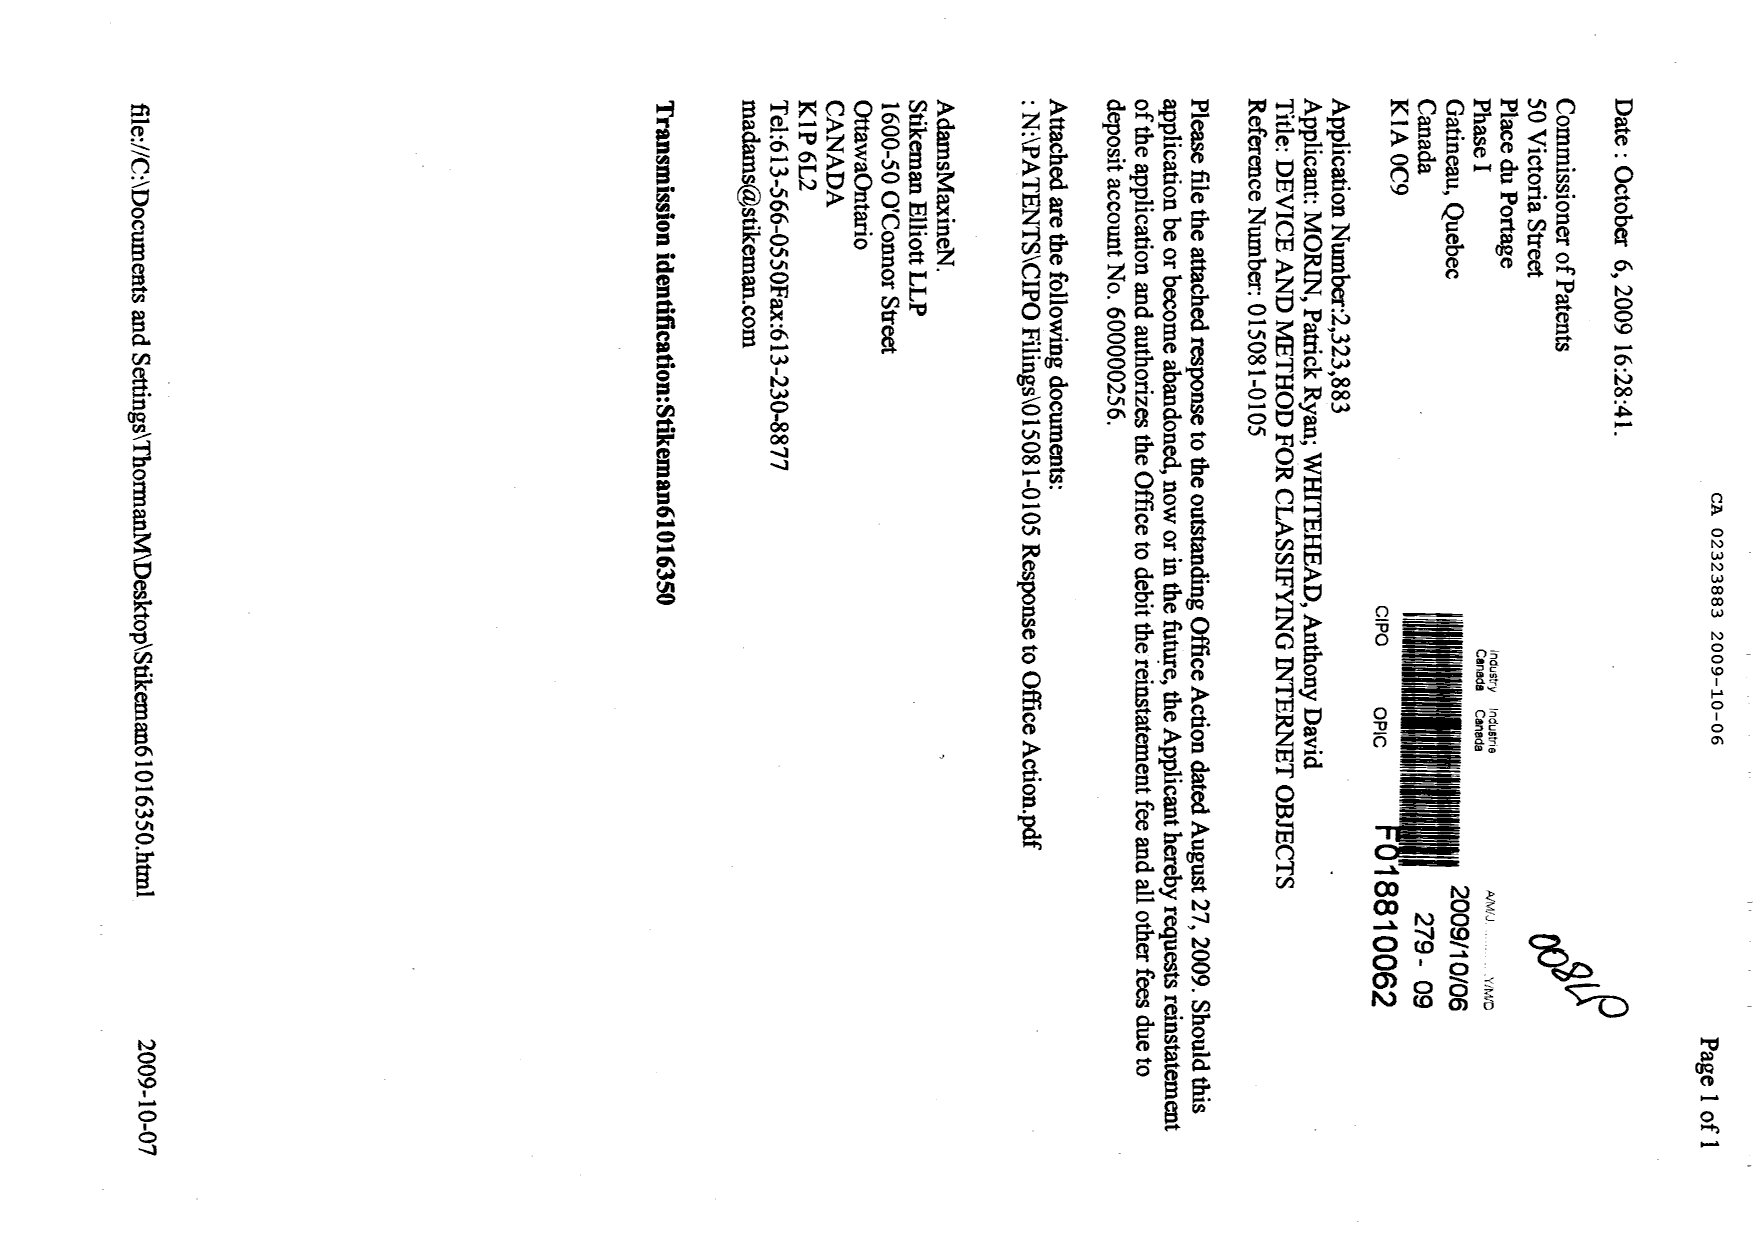 Canadian Patent Document 2323883. Prosecution-Amendment 20091006. Image 1 of 14